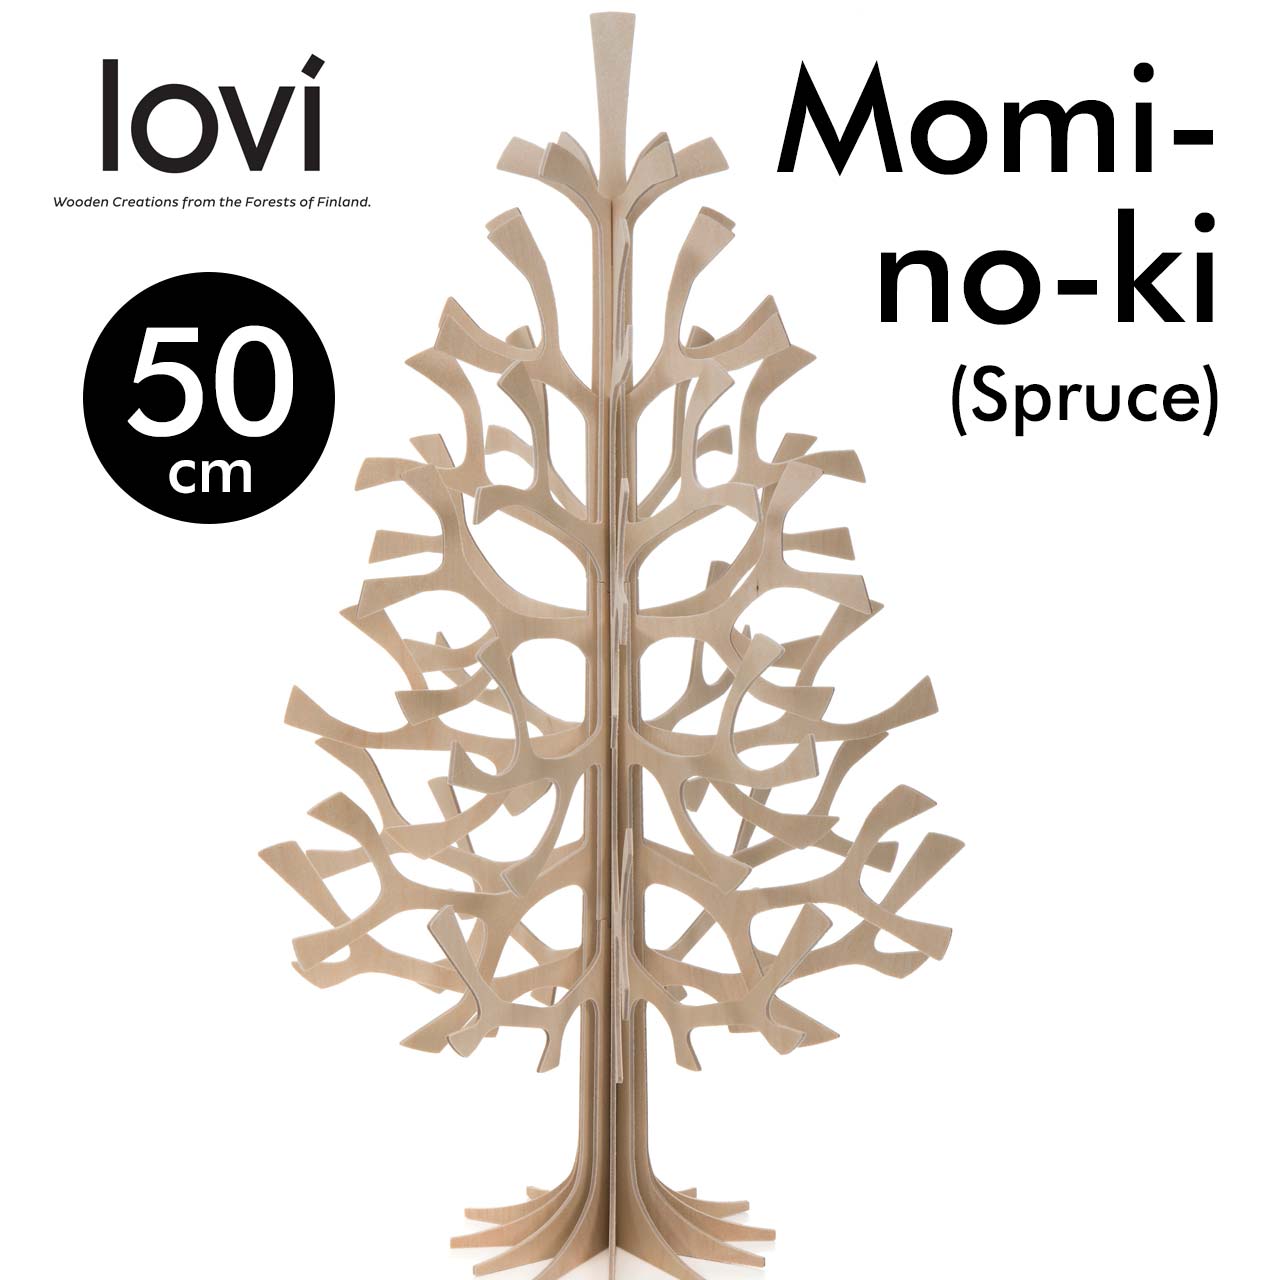 Lovi（ロヴィ）クリスマスツリー 50cm グレー もみの木 Momi-no-ki 北欧 フィンランド - 2